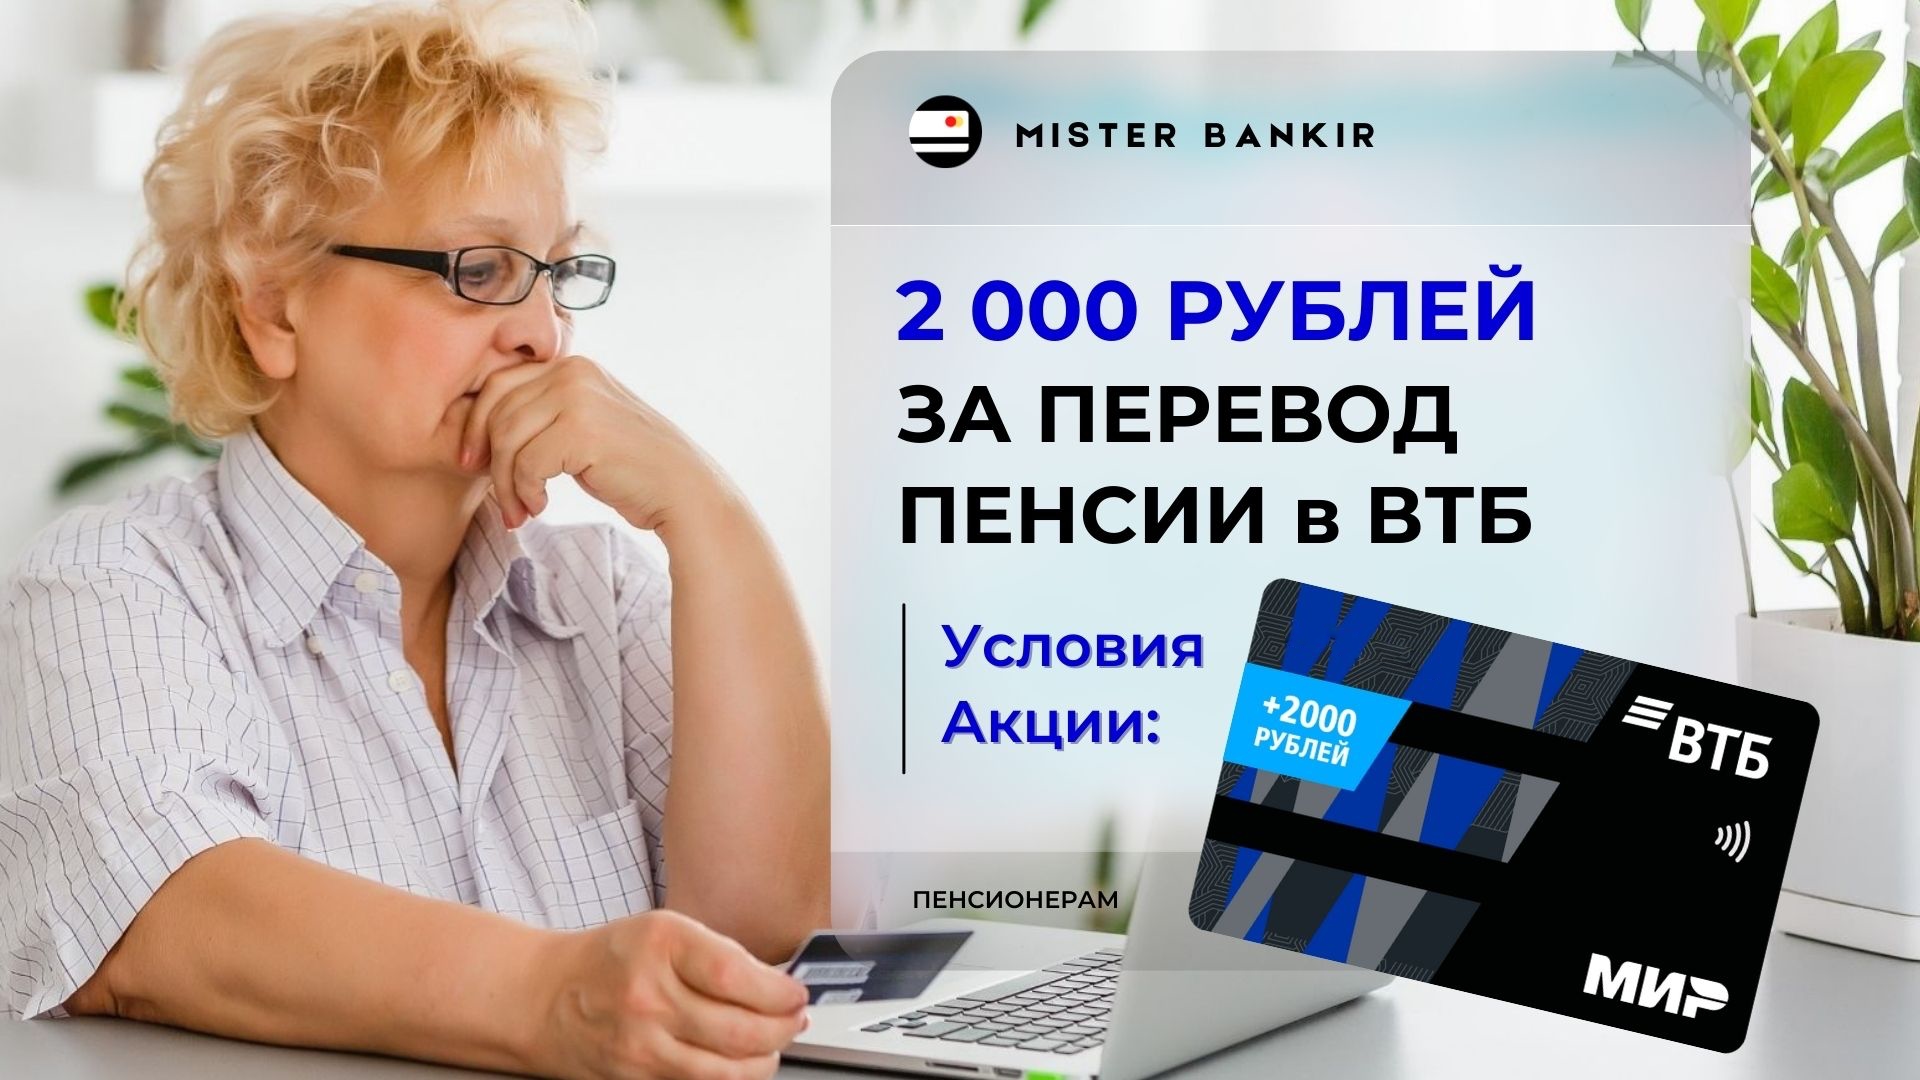 ВТБ 2000 рублей за перевод пенсии. Условия акции